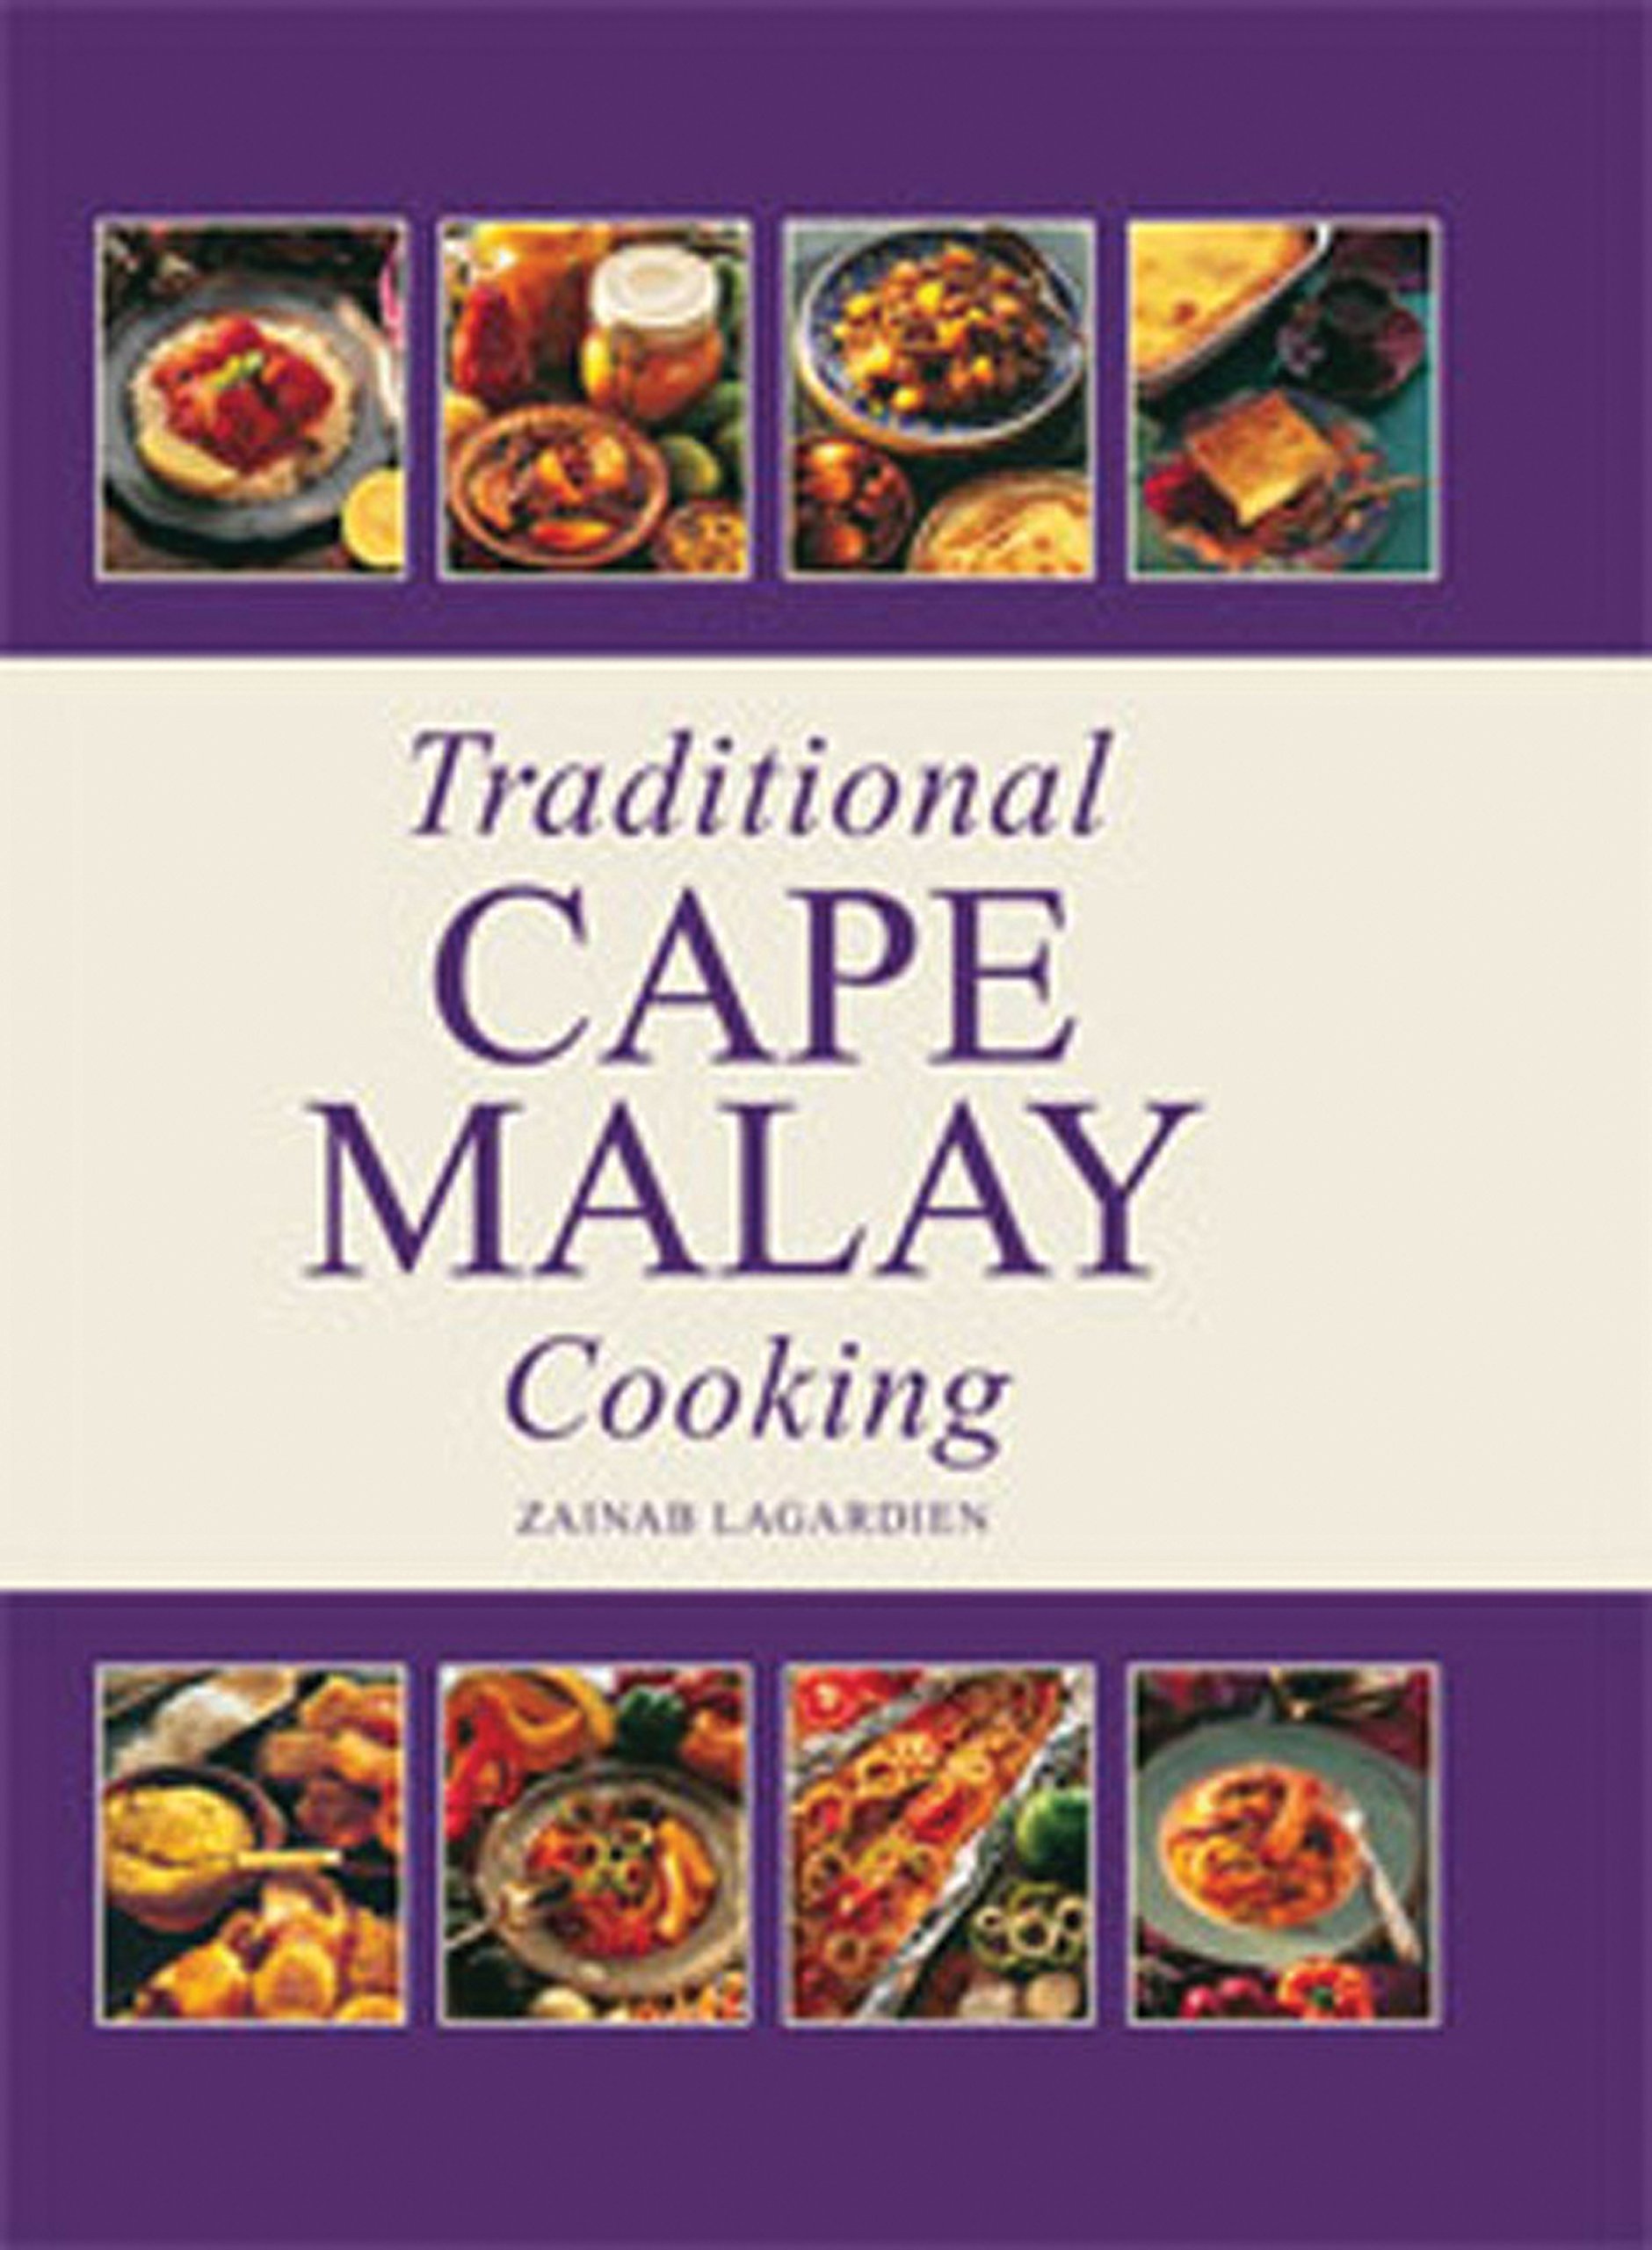 Cape Malay Cookbook Pdf Download